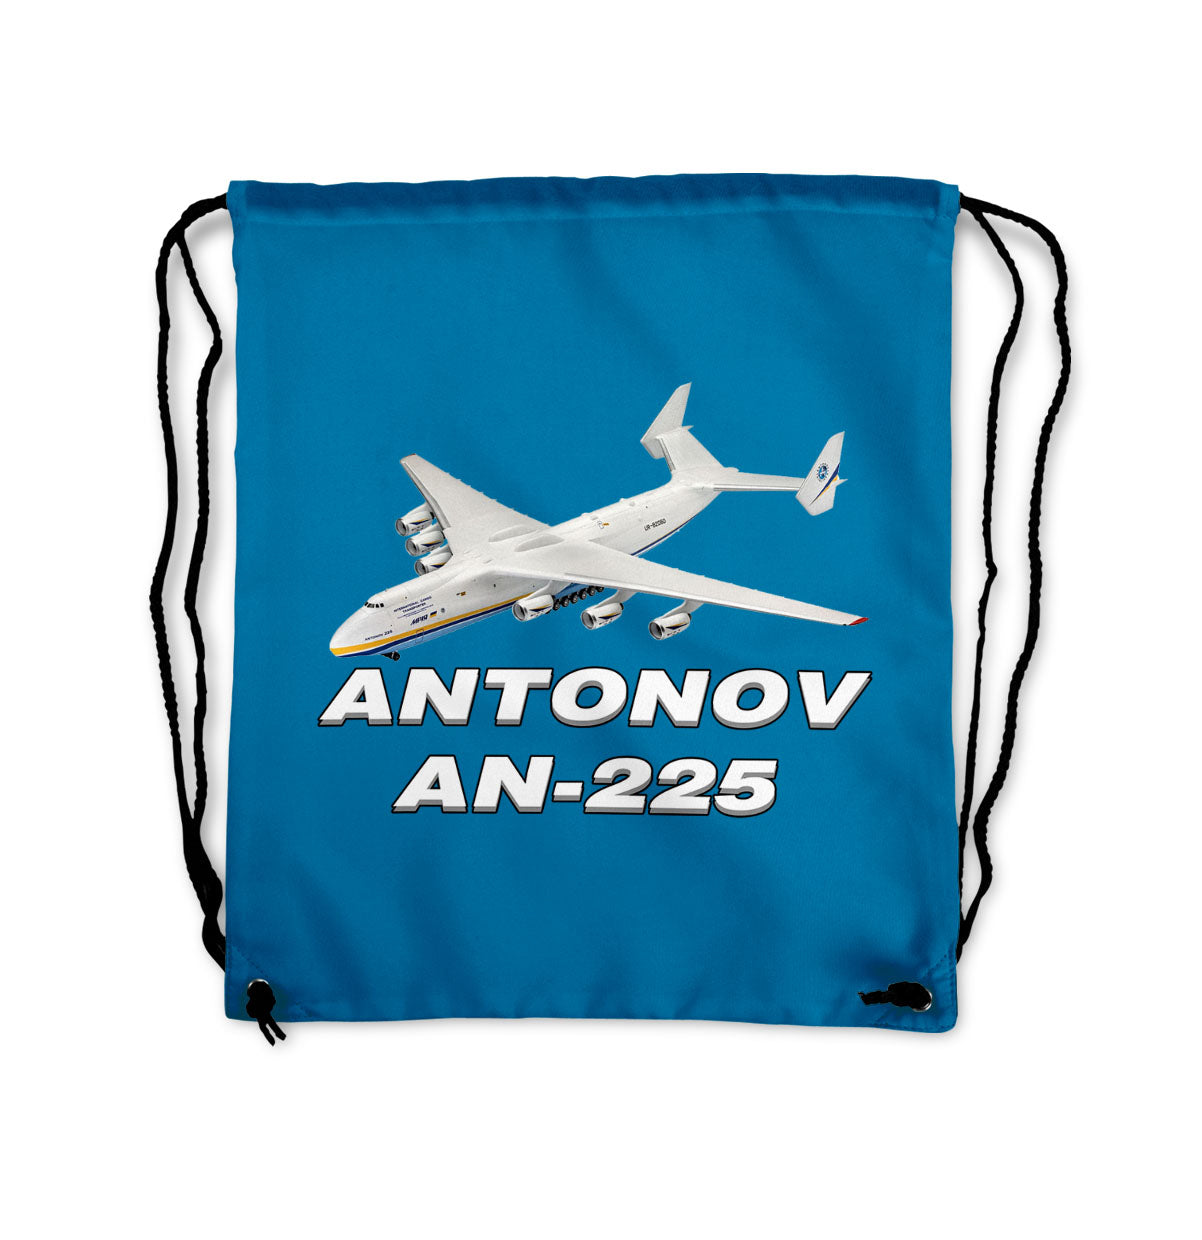 Antonov AN-225 (12) Designed Drawstring Bags